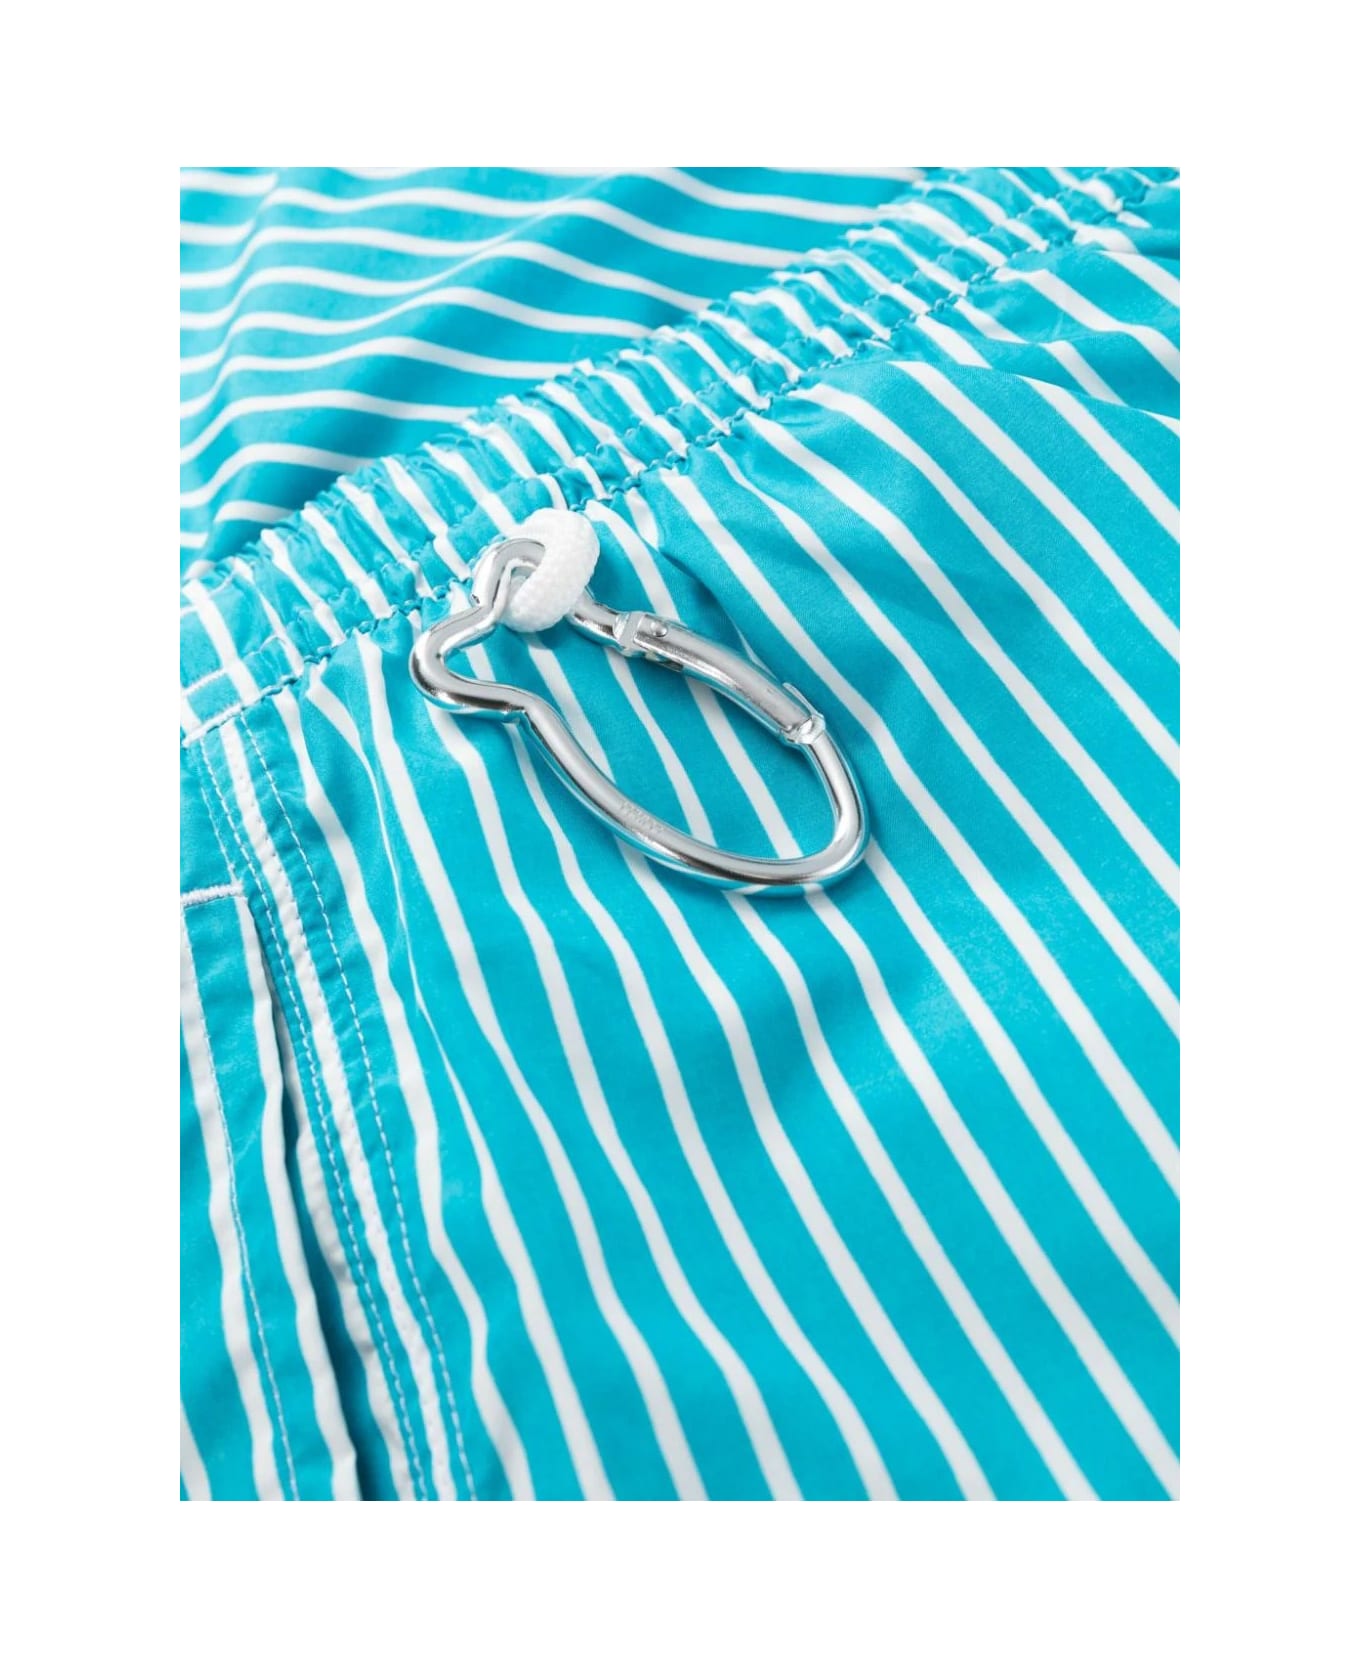 Fedeli Light Blue And White Striped Swim Shorts - Blue